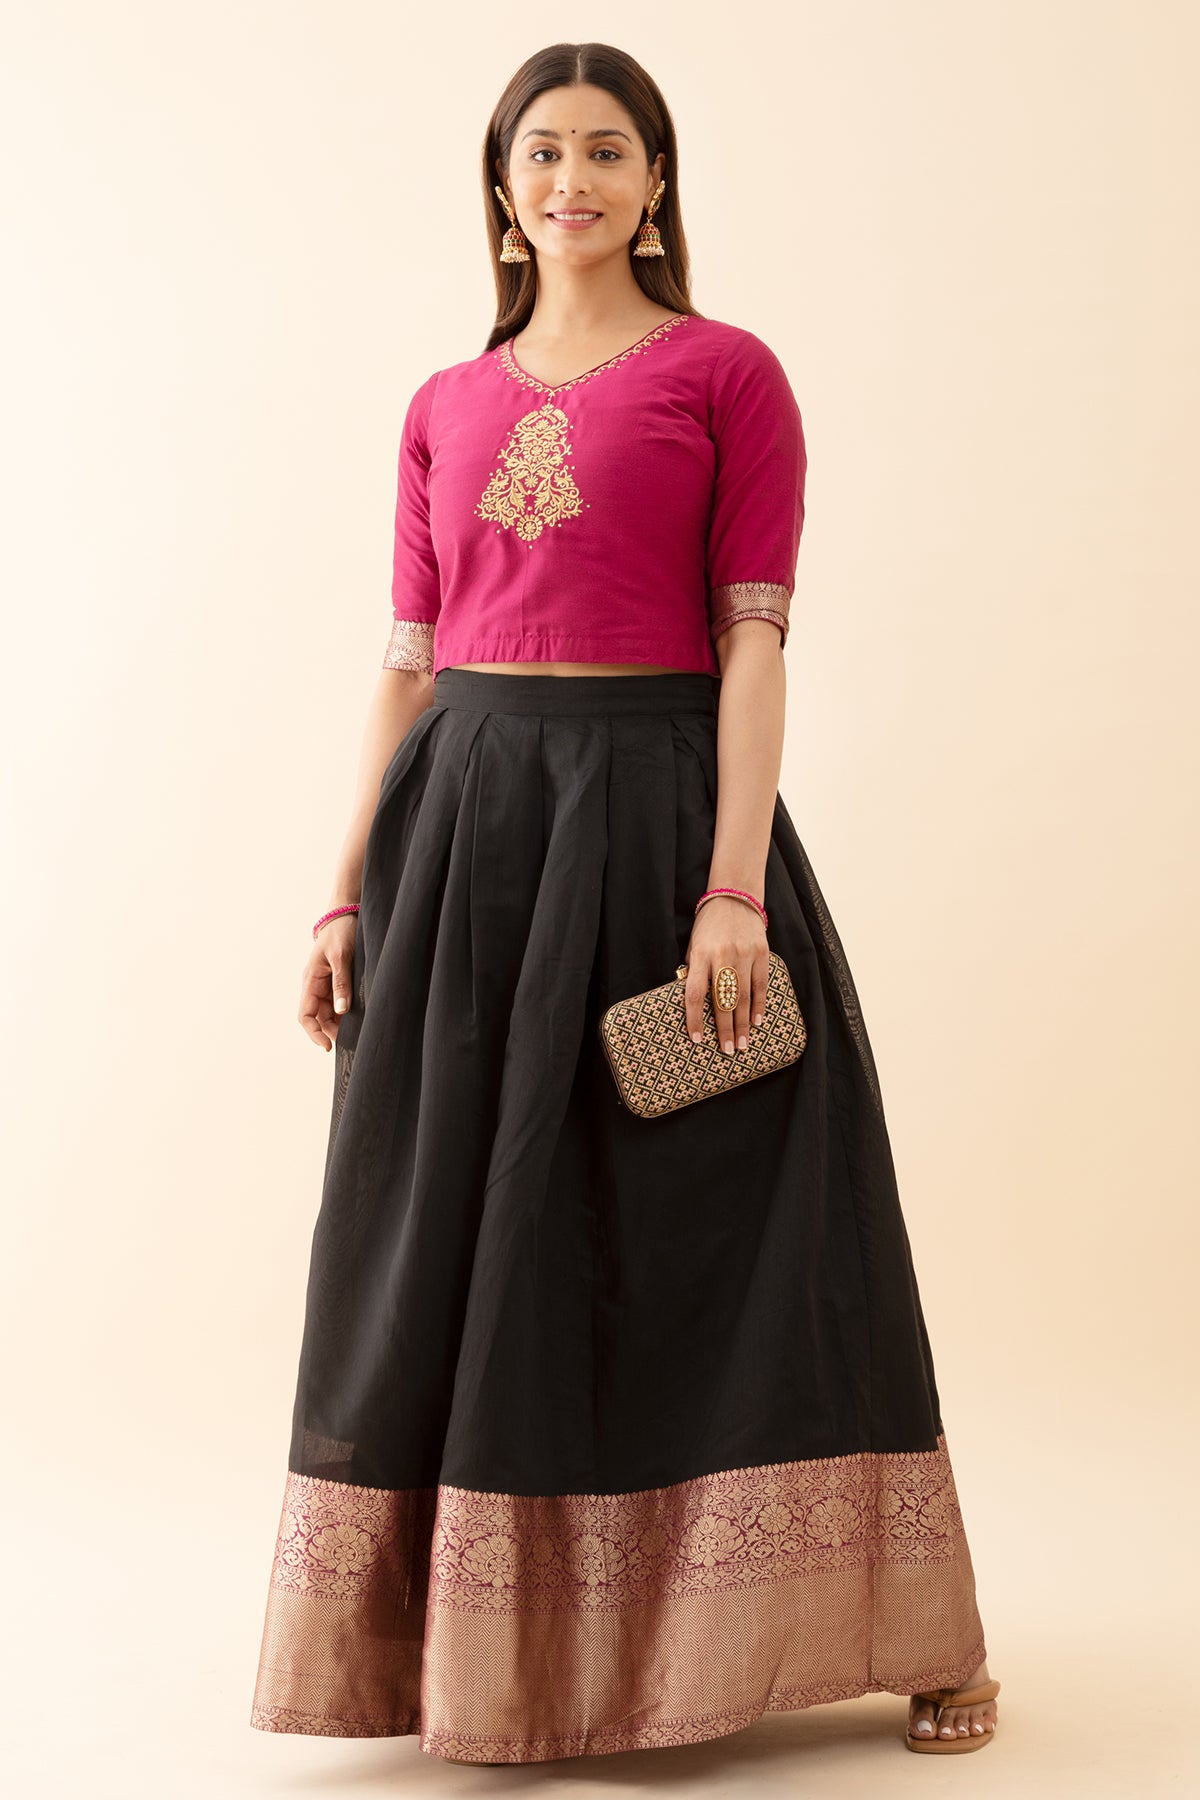 Ethnic Motif Embroidered Top with Zari Border Skirtset Pink Black